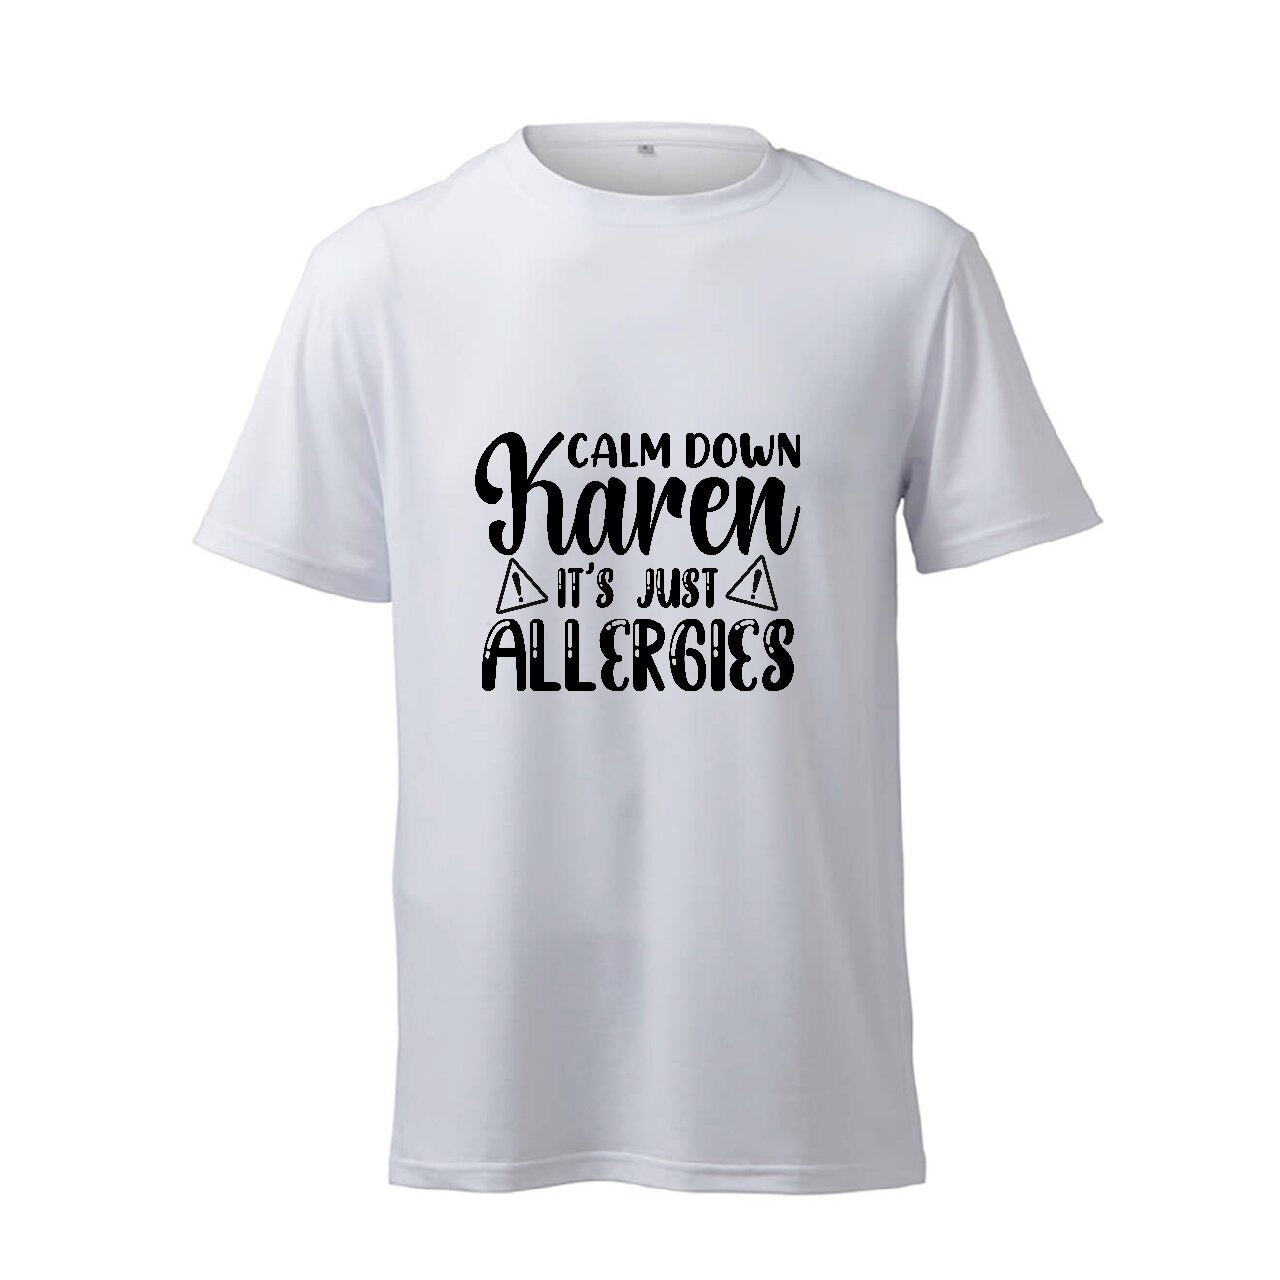 Calm Down Karen It's Just Allergies- T-Shirt